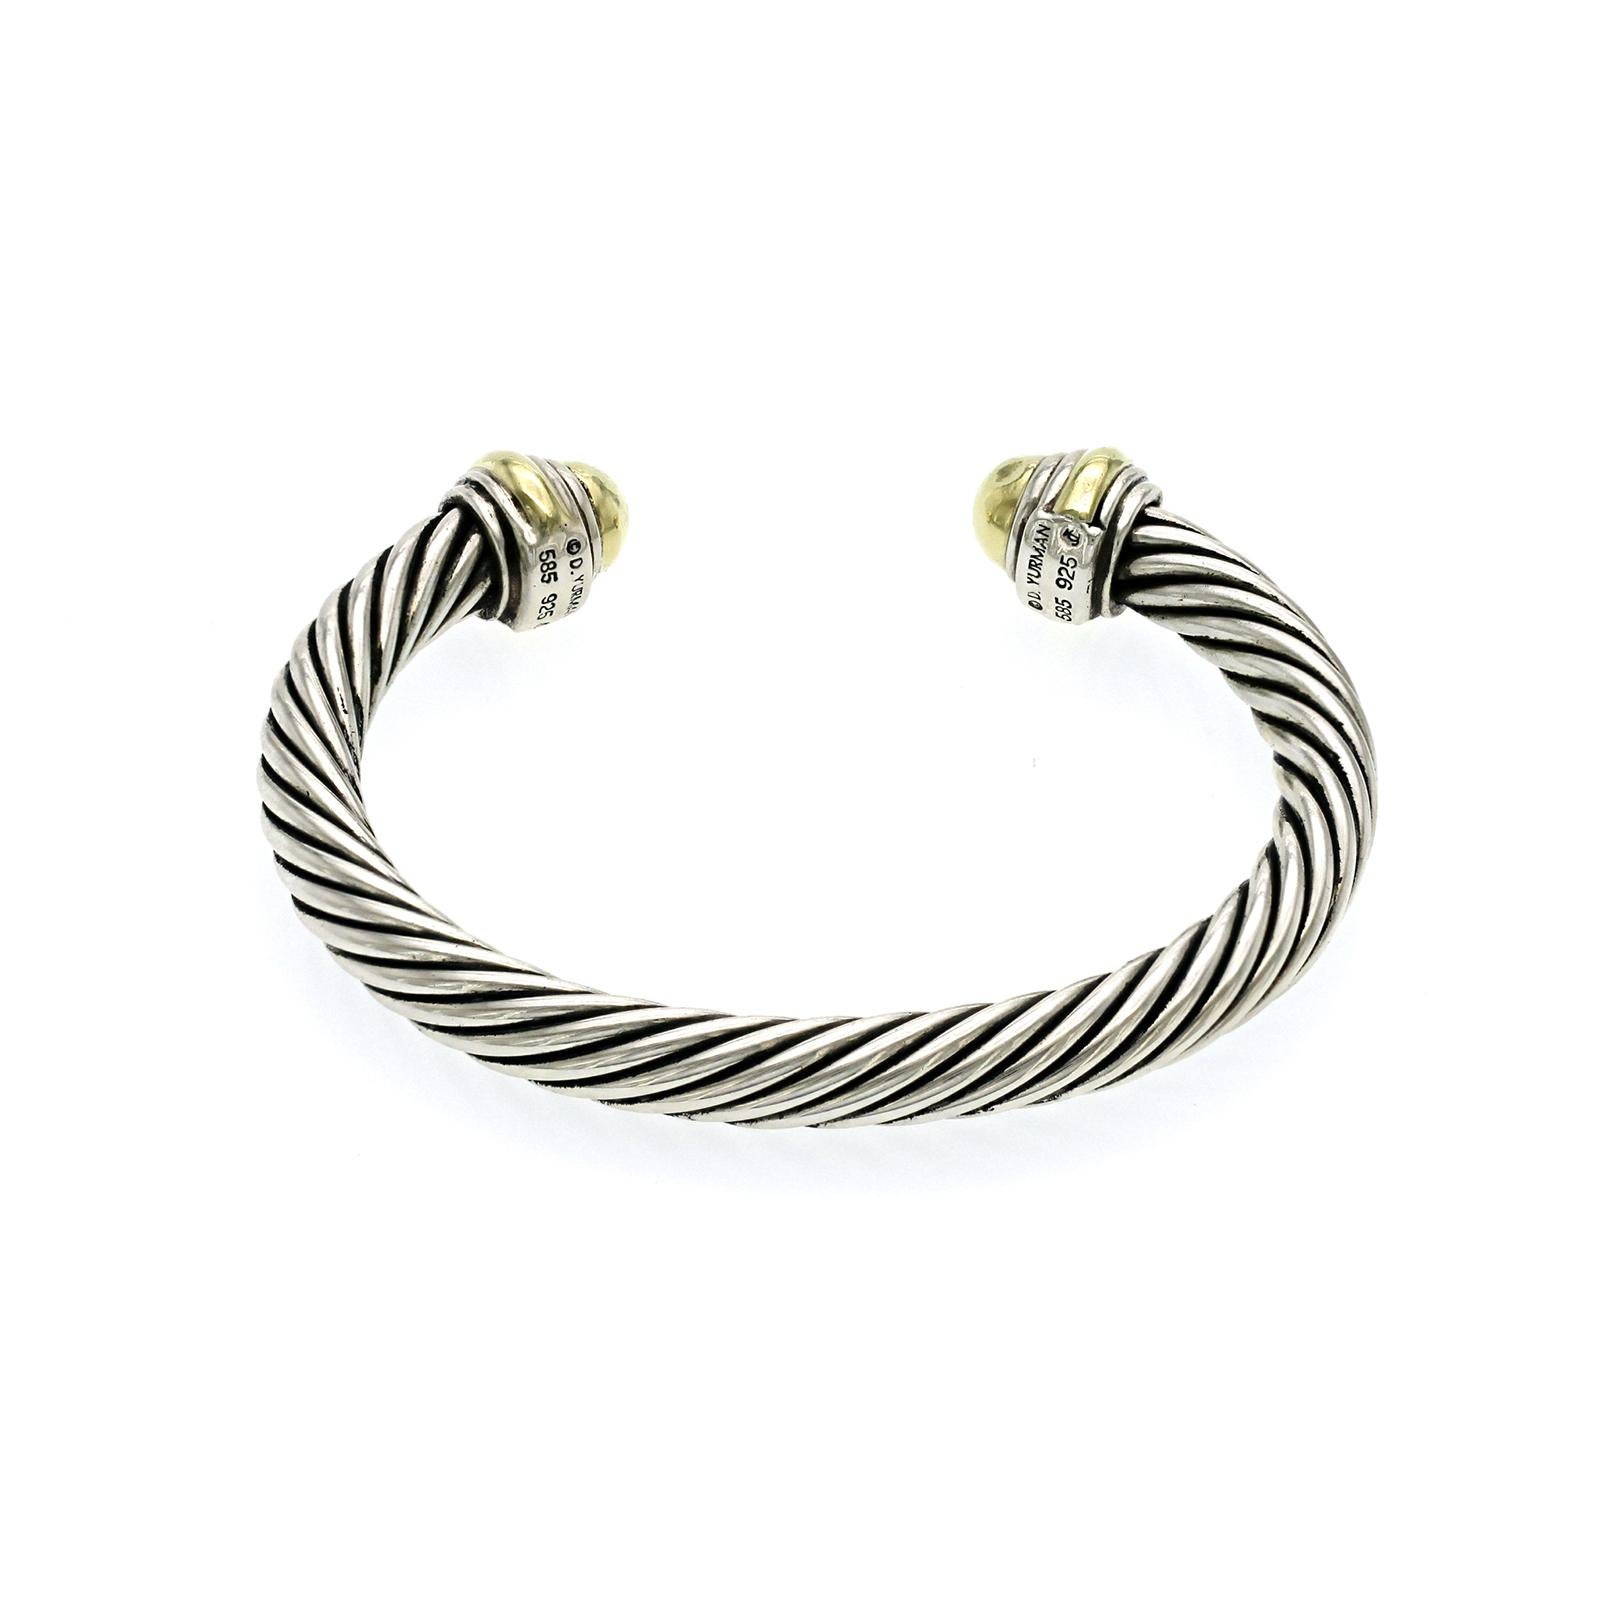 David Yurman 925 Sterling Silver & 14k Gold 7mm Cable Cuff Bracelet Size 6.5